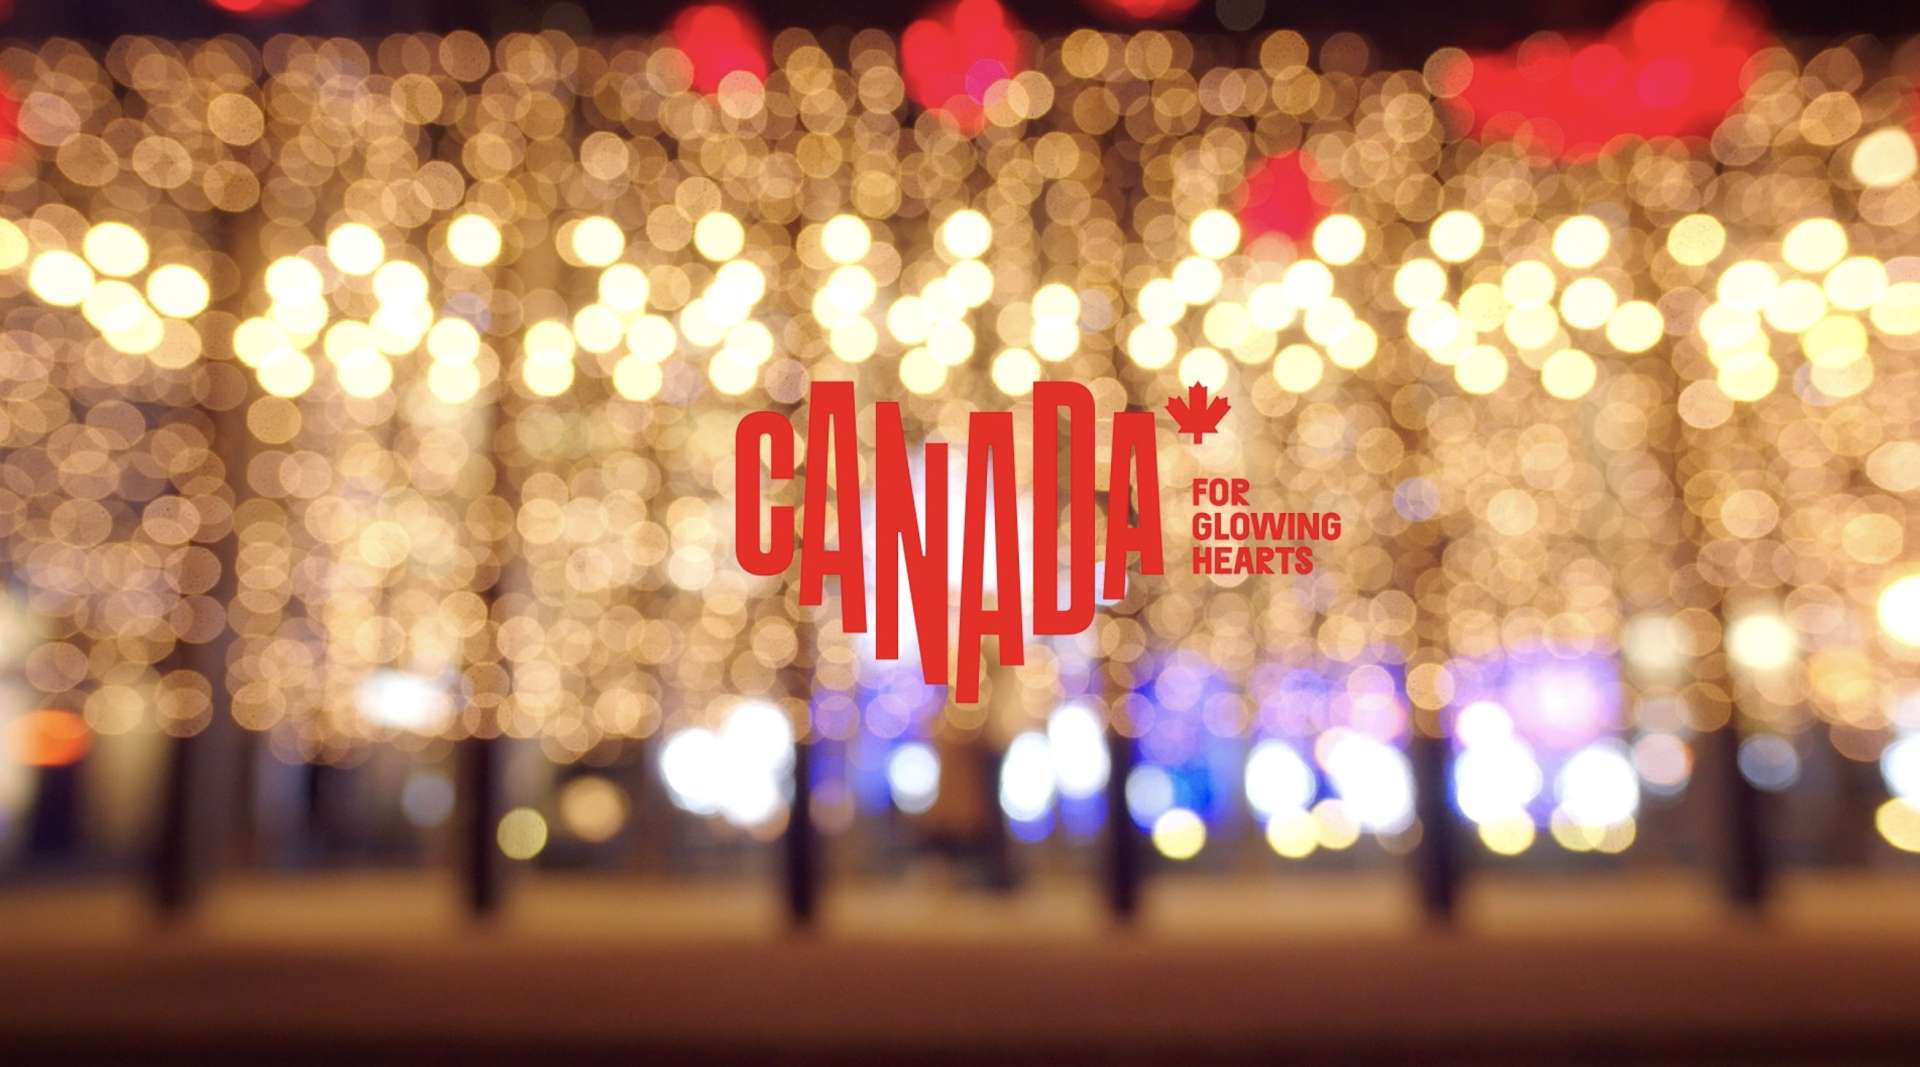 加拿大旅游局 Destination Canada 2020 CNY